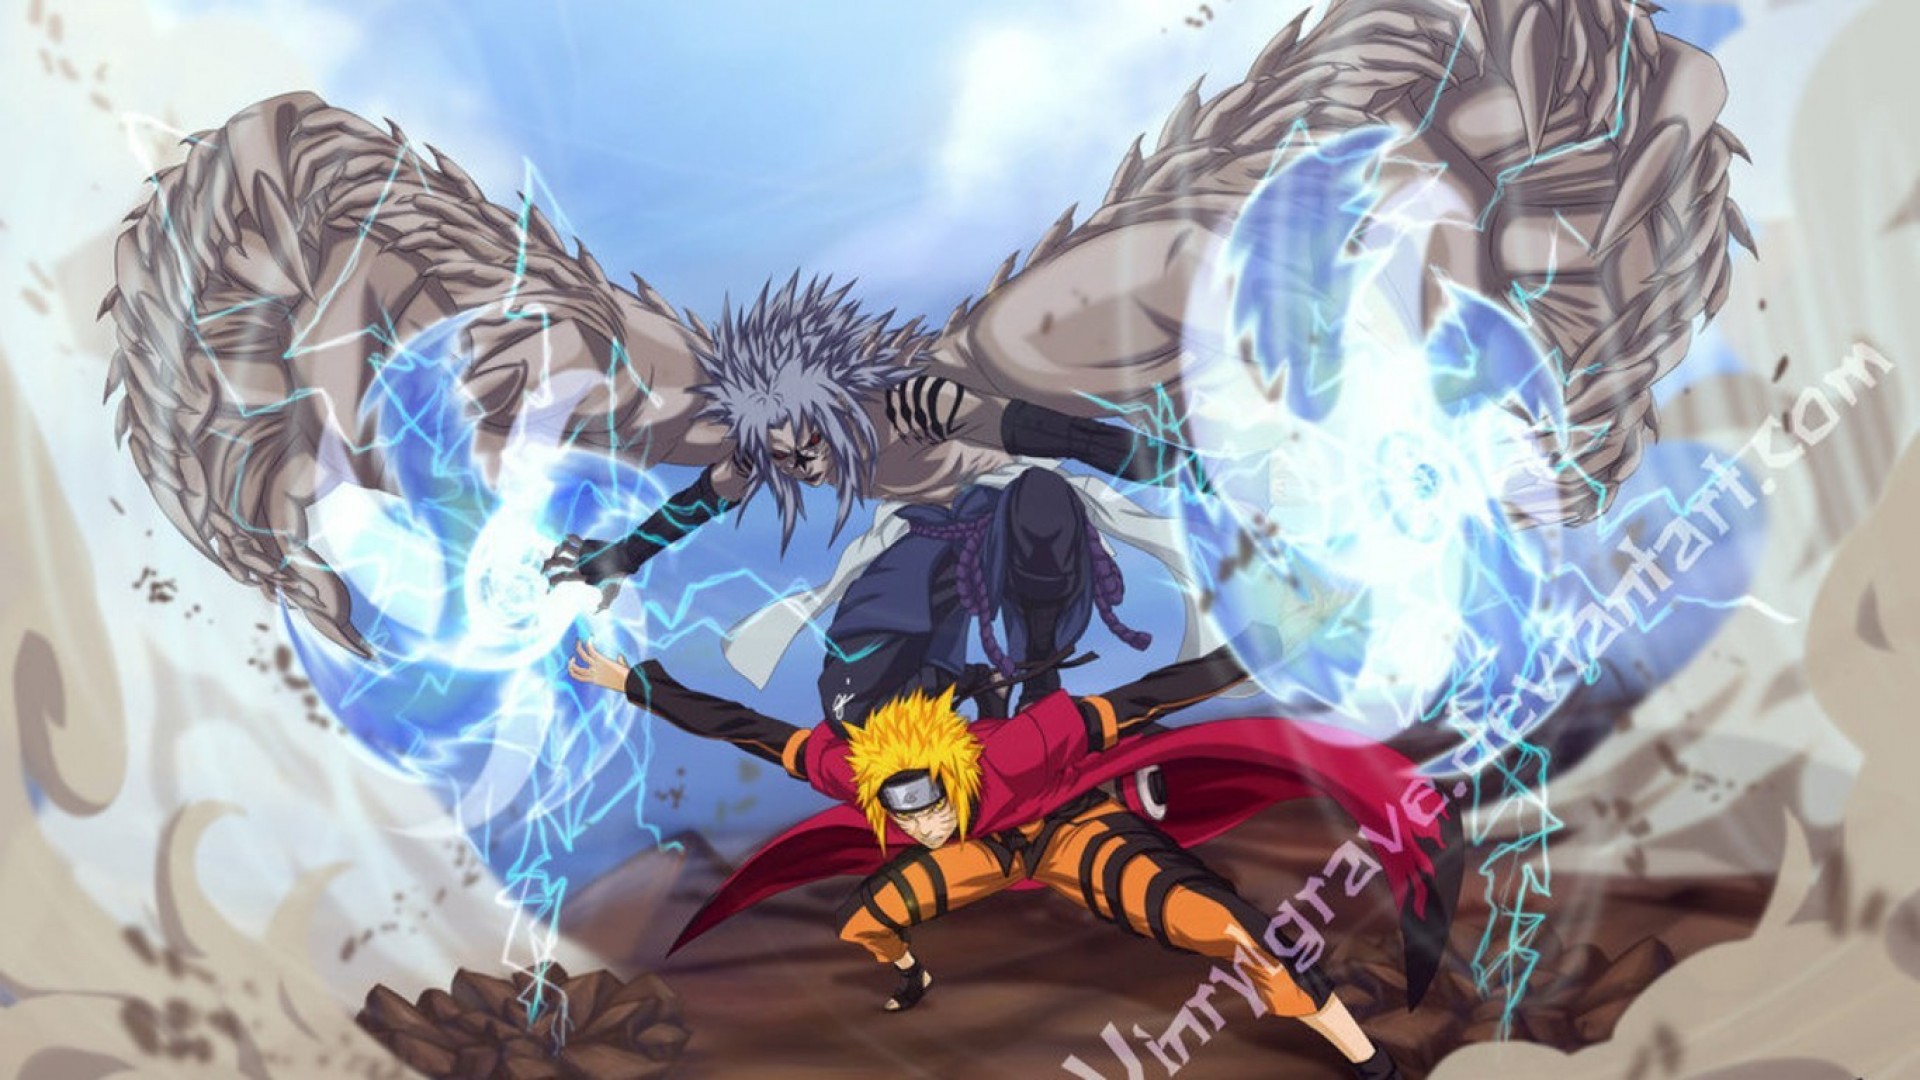 A29 Naruto Uzumaki anime HD Desktop background wallpapers downloads